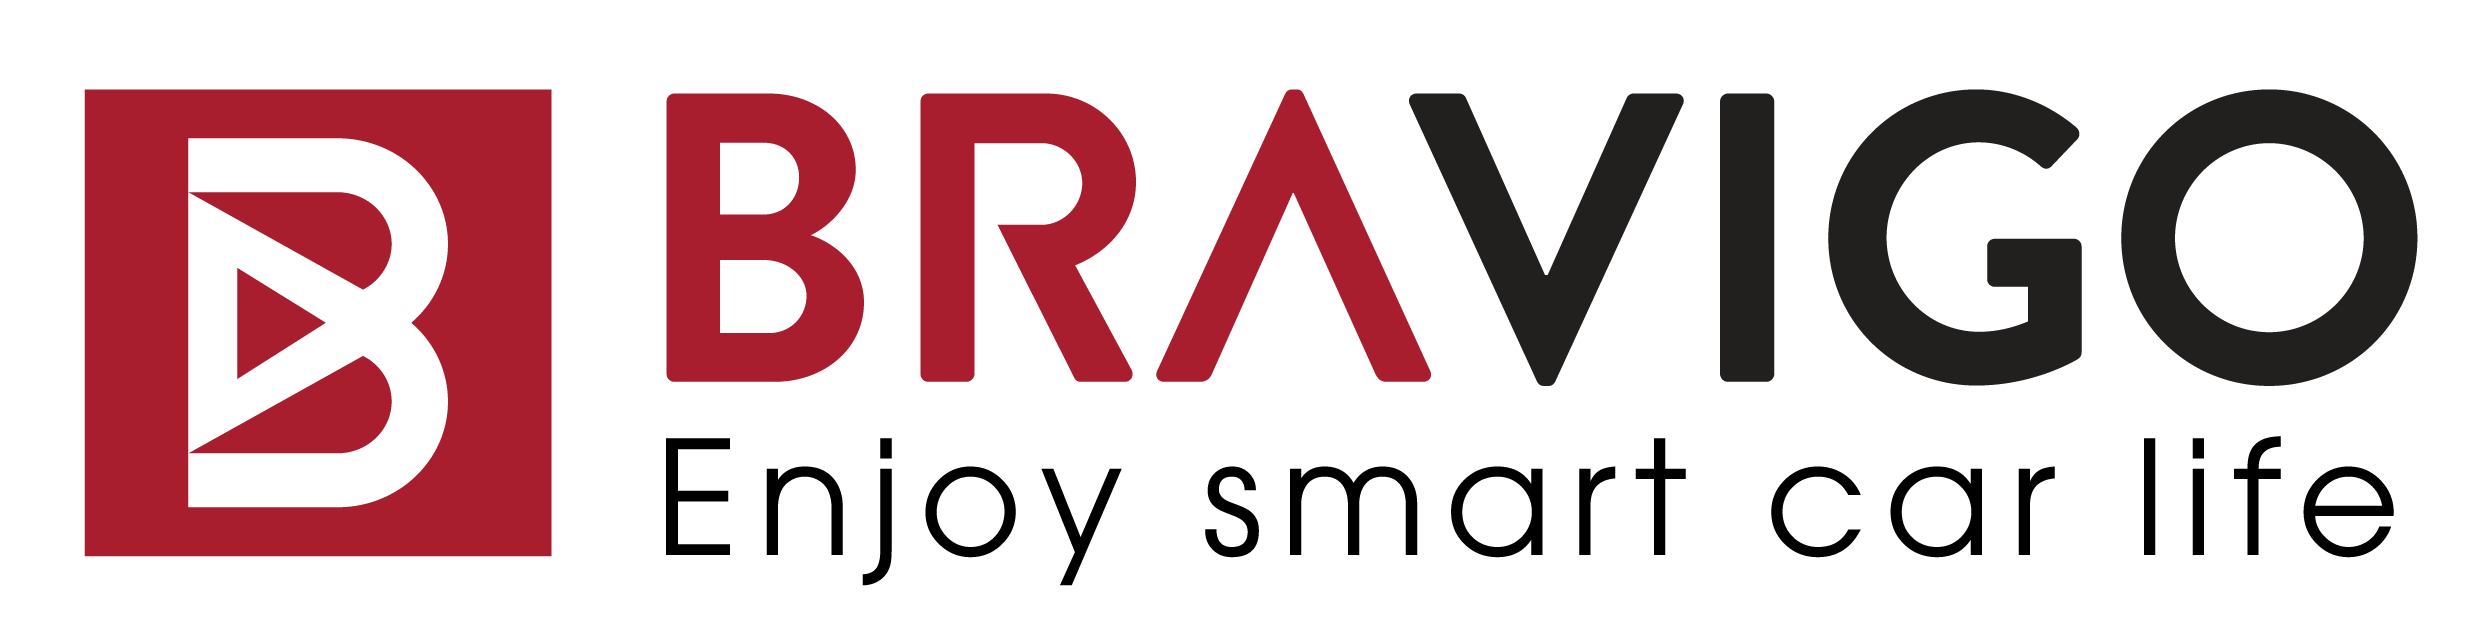 Logo Bravigo full